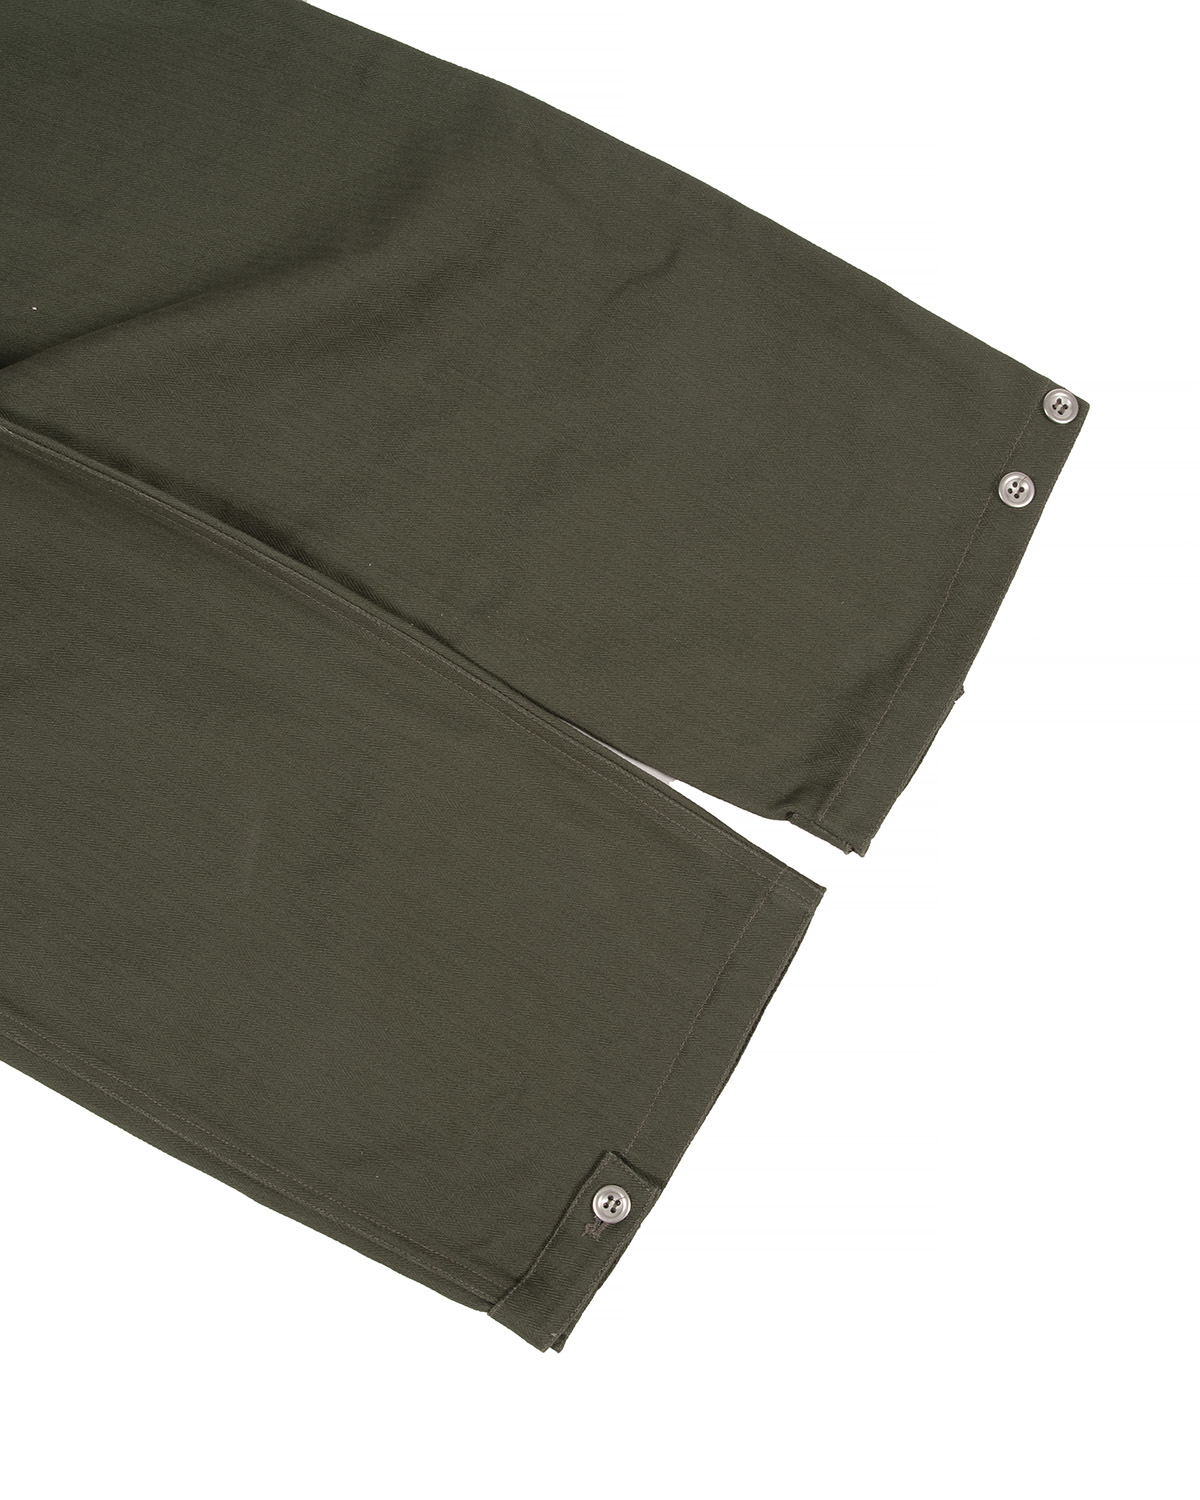 German WWII Reed Green Trousers